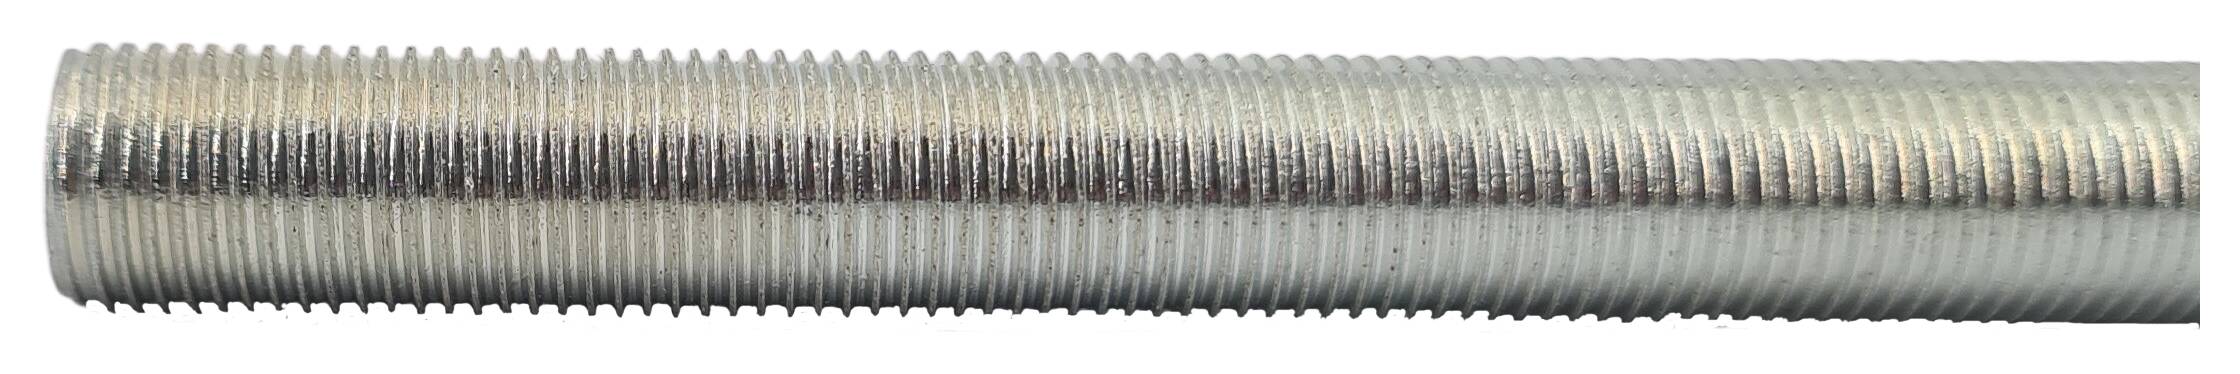 iron thread tube M10x1x335 round zinc